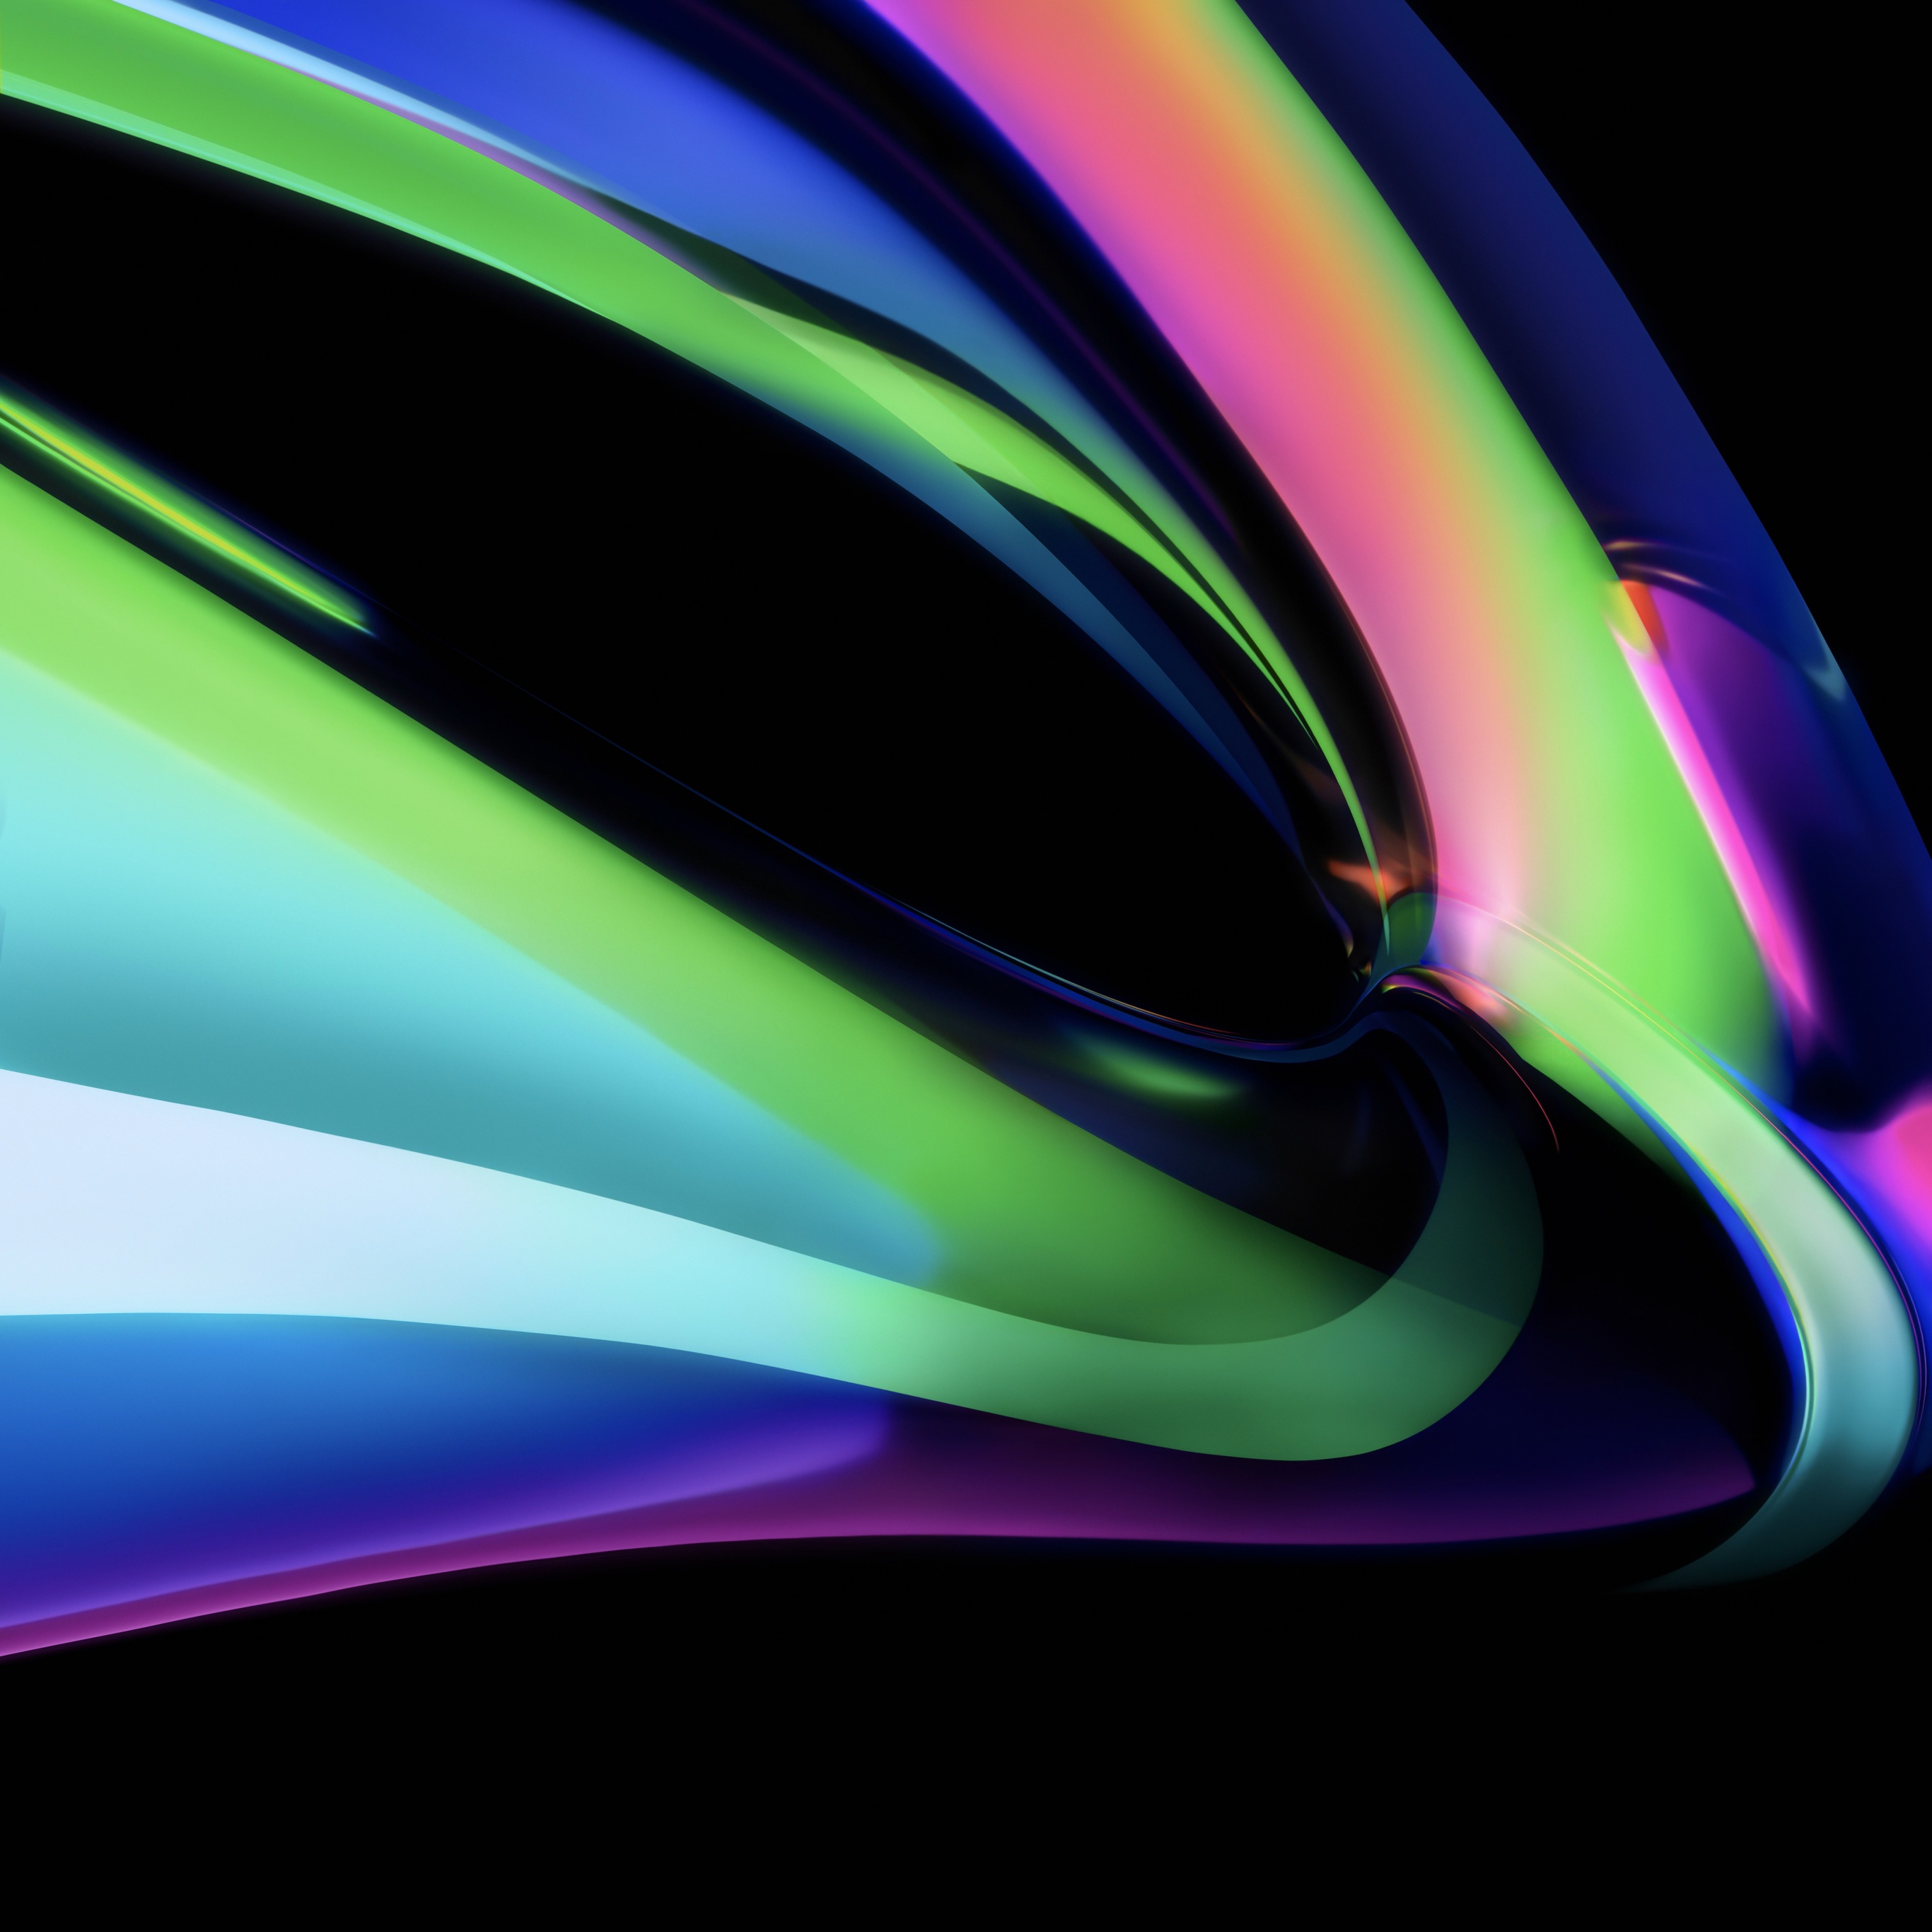 MacBook Pro Wallpaper 4K, Apple M1, Multicolor, Abstract, #4032